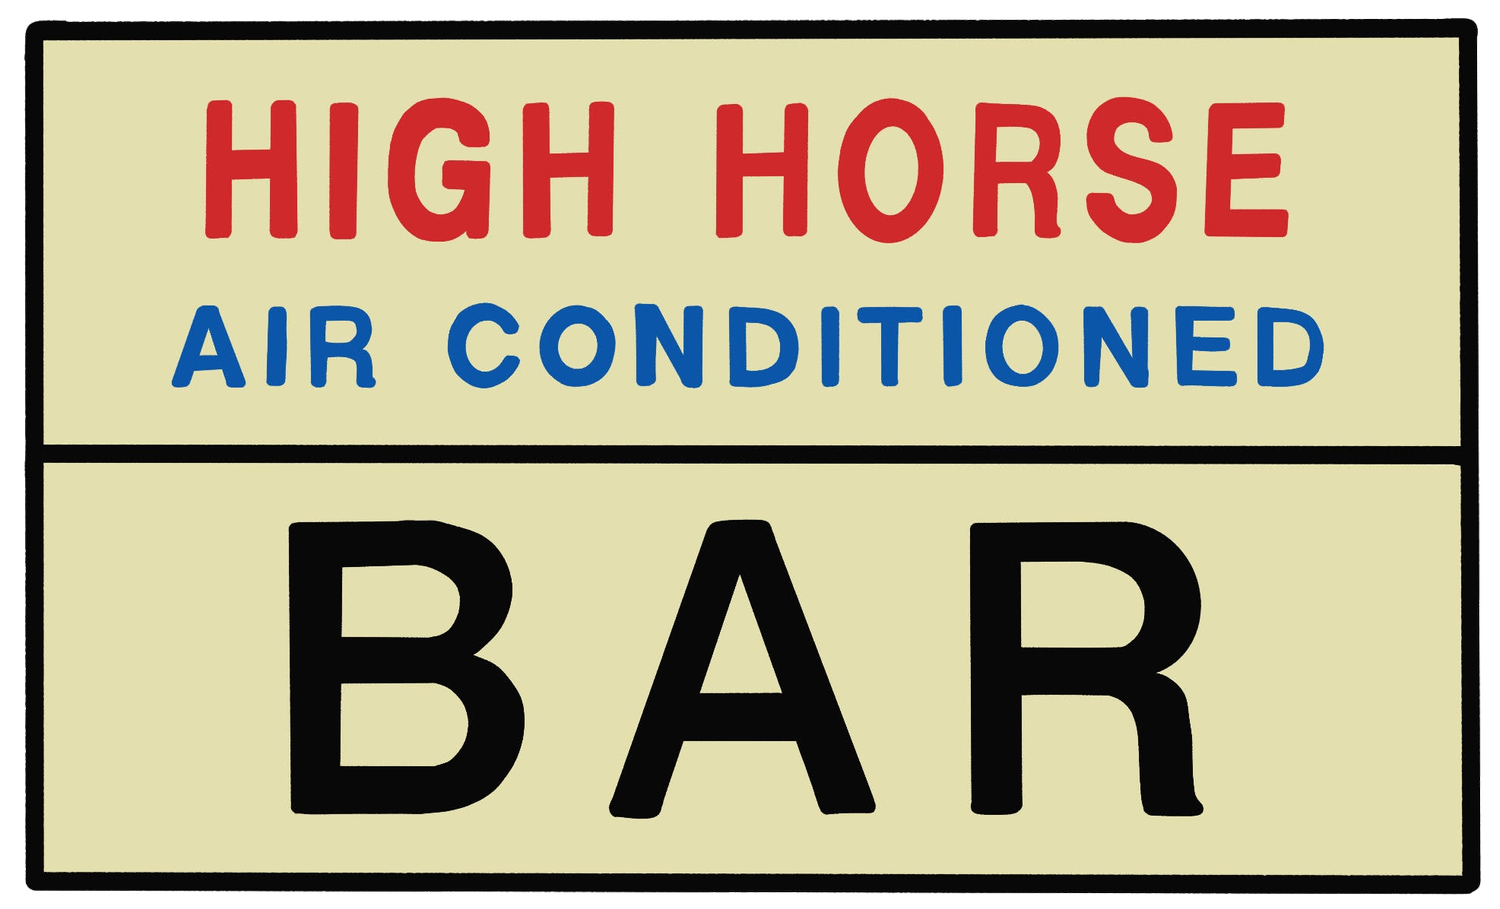 HIGH HORSE